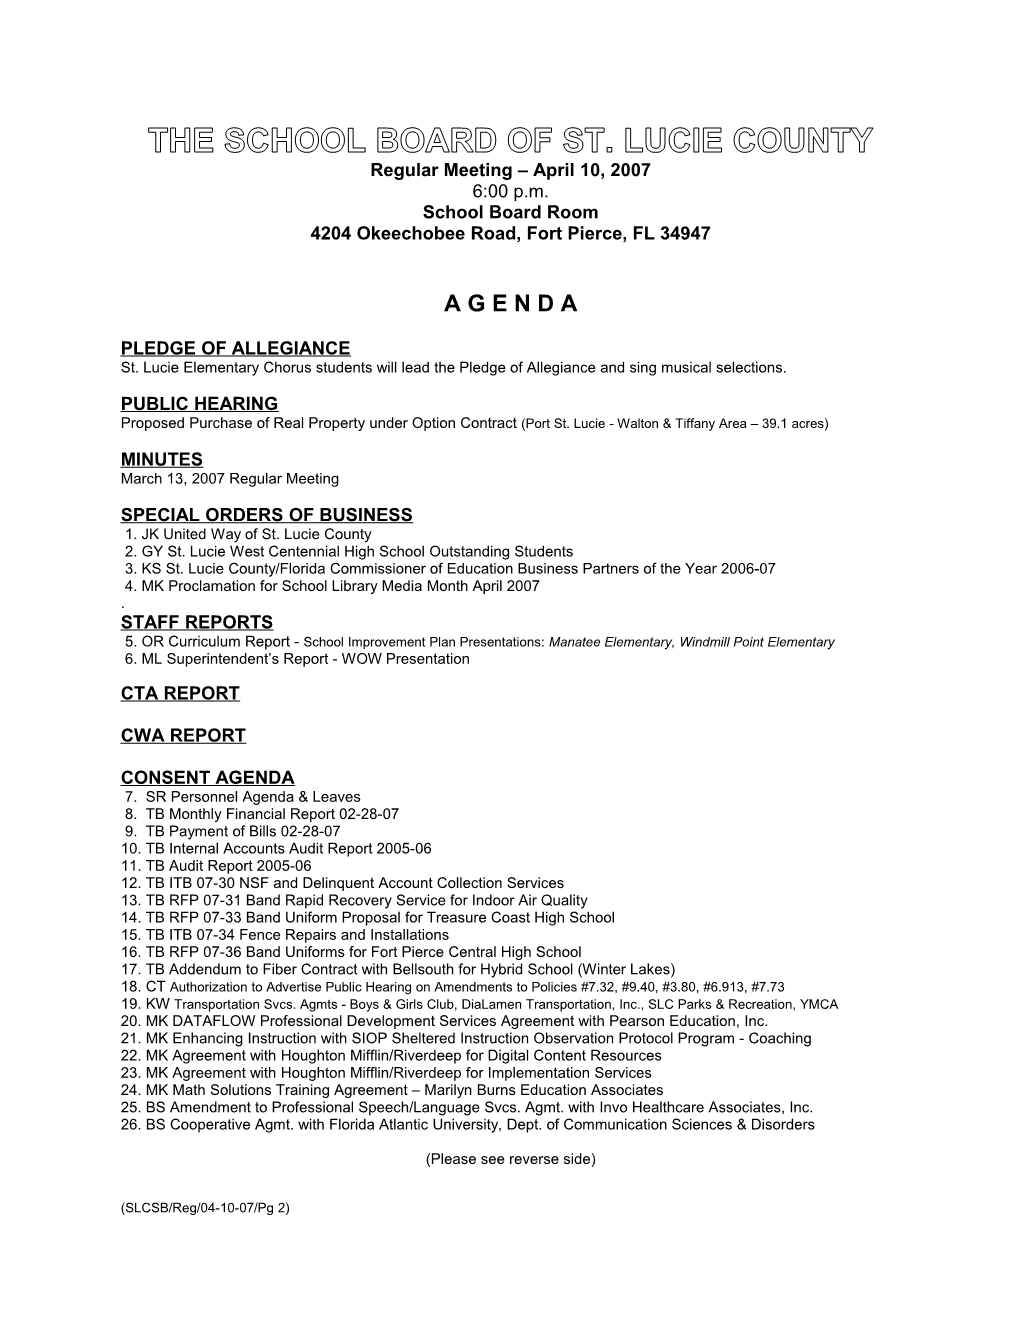 04-10-07 SLCSB Regular Meeting Agenda